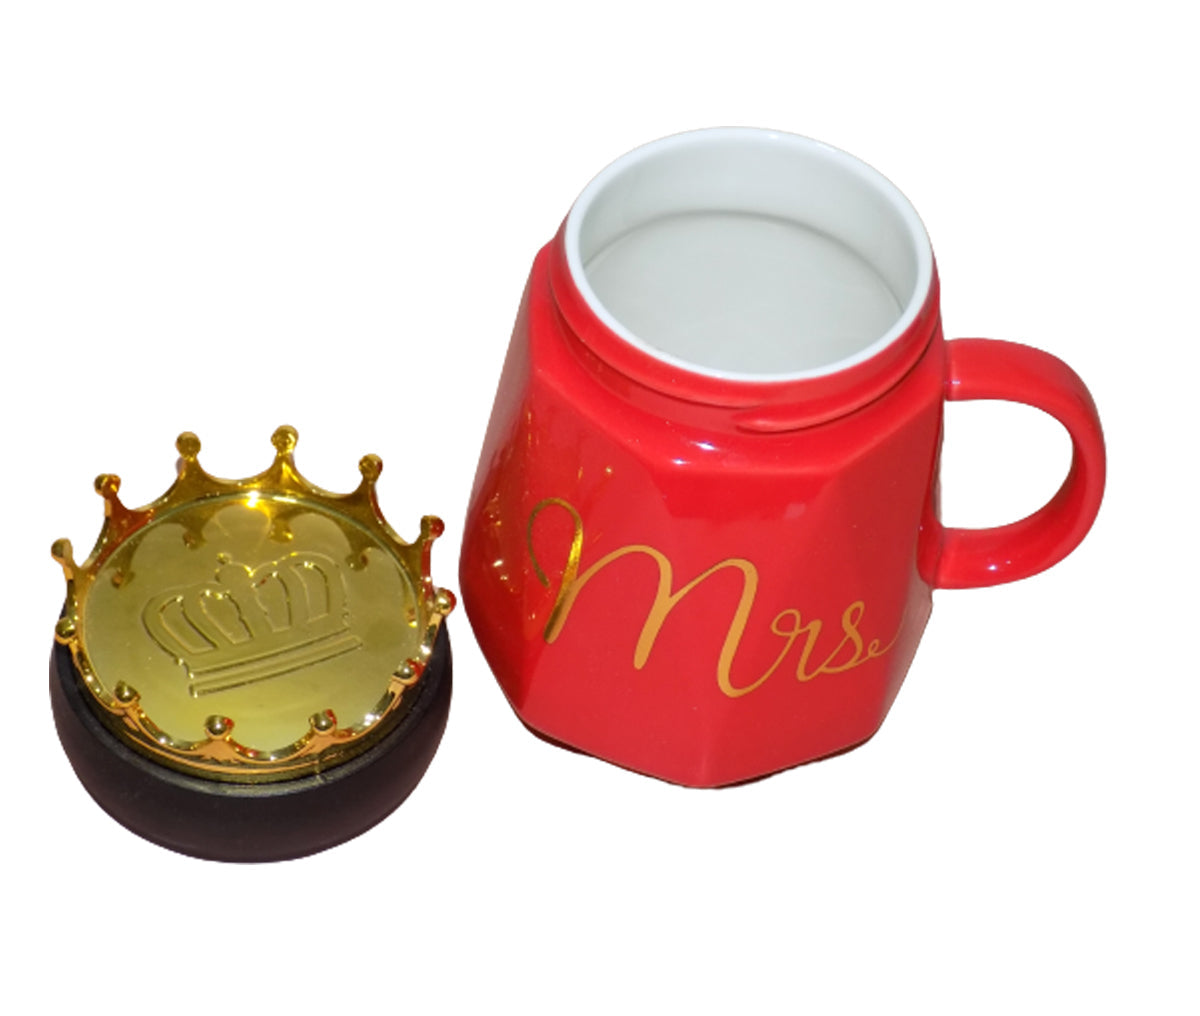 Mrs. Coffee Mug in Gorgeous Red with Crown Lid - Sip in Royal Splendor